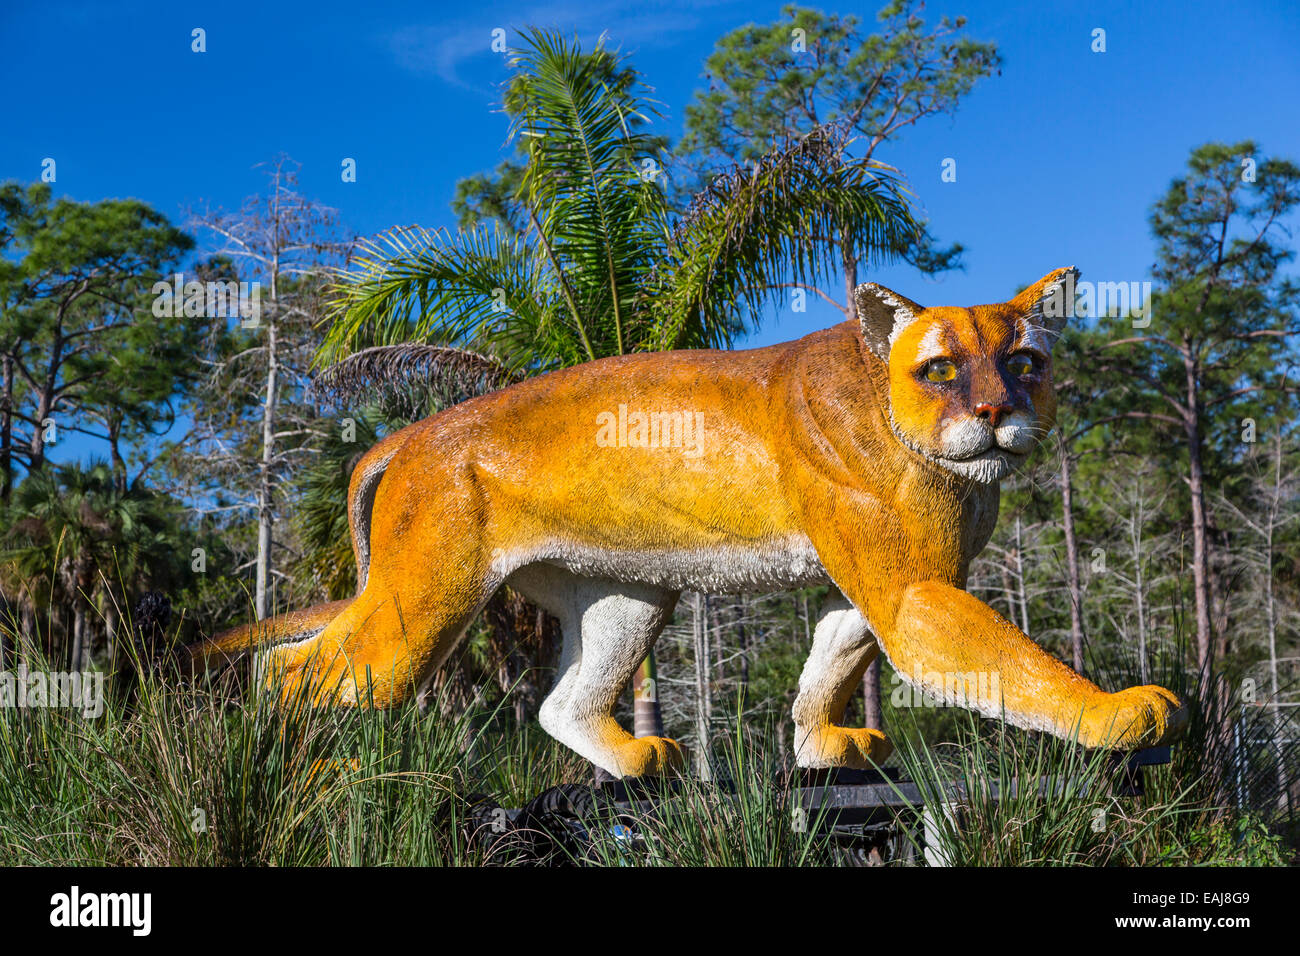 Florida panther animal hi-res stock photography and images - Alamy